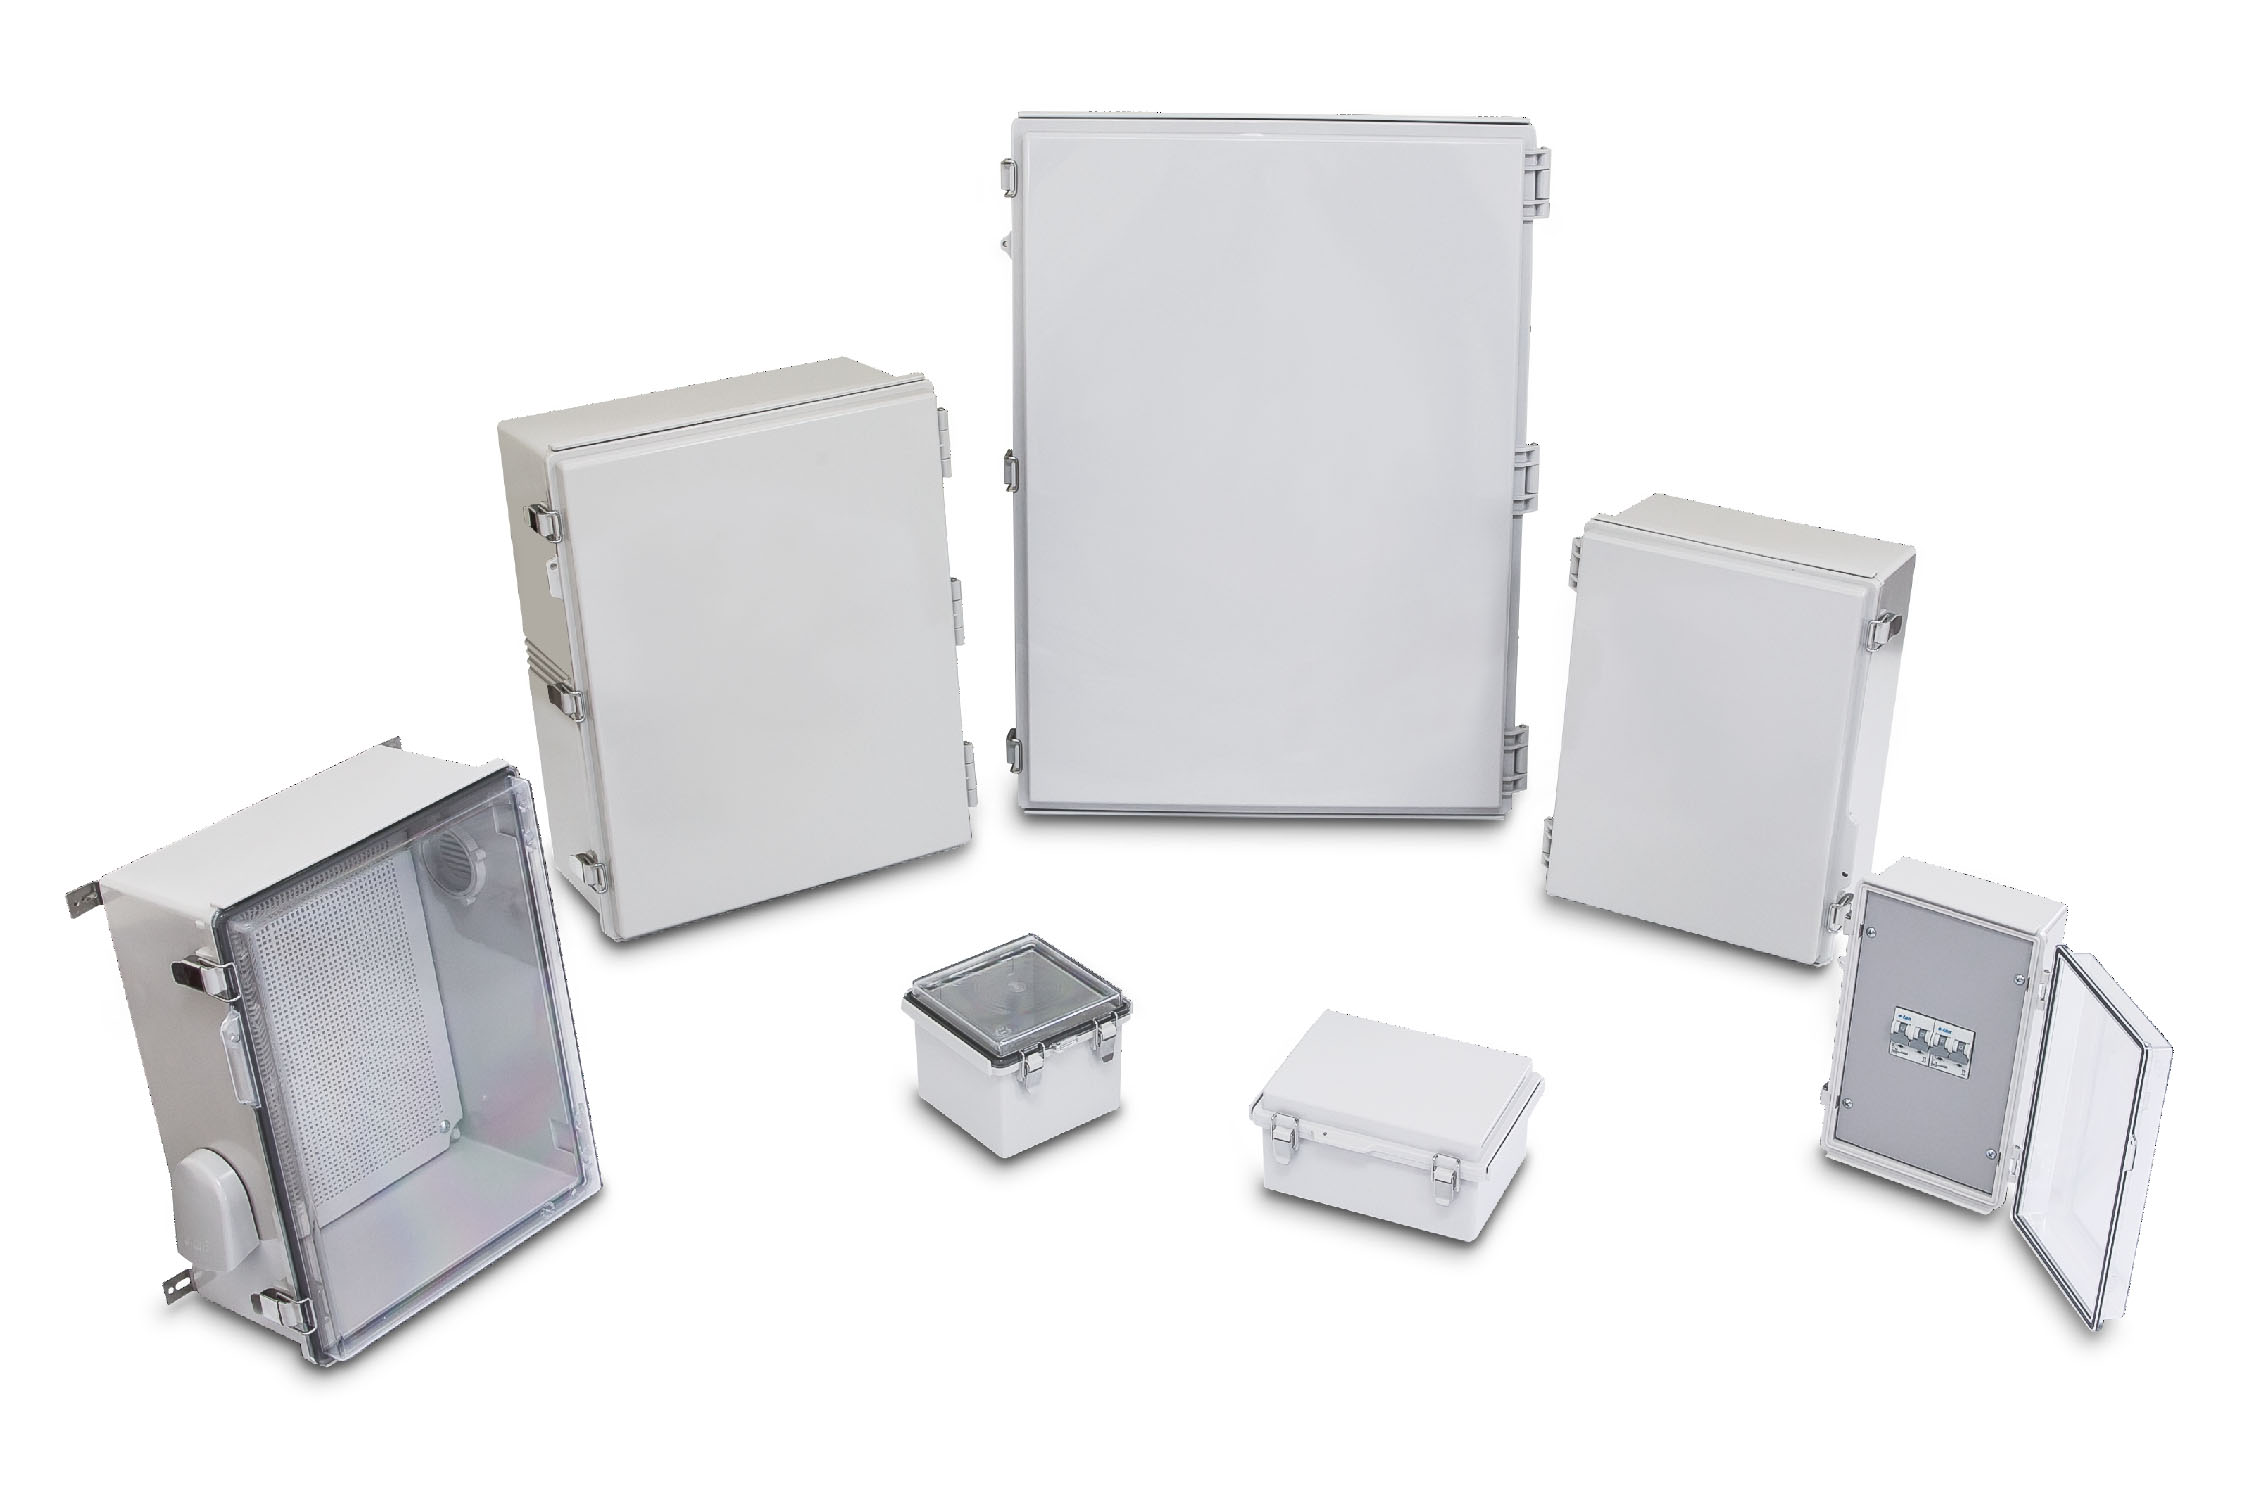 Metal Clasp Waterproof box, Plastic Electrical Boxes, waterproof  enclosures, surface-mounted enclosure